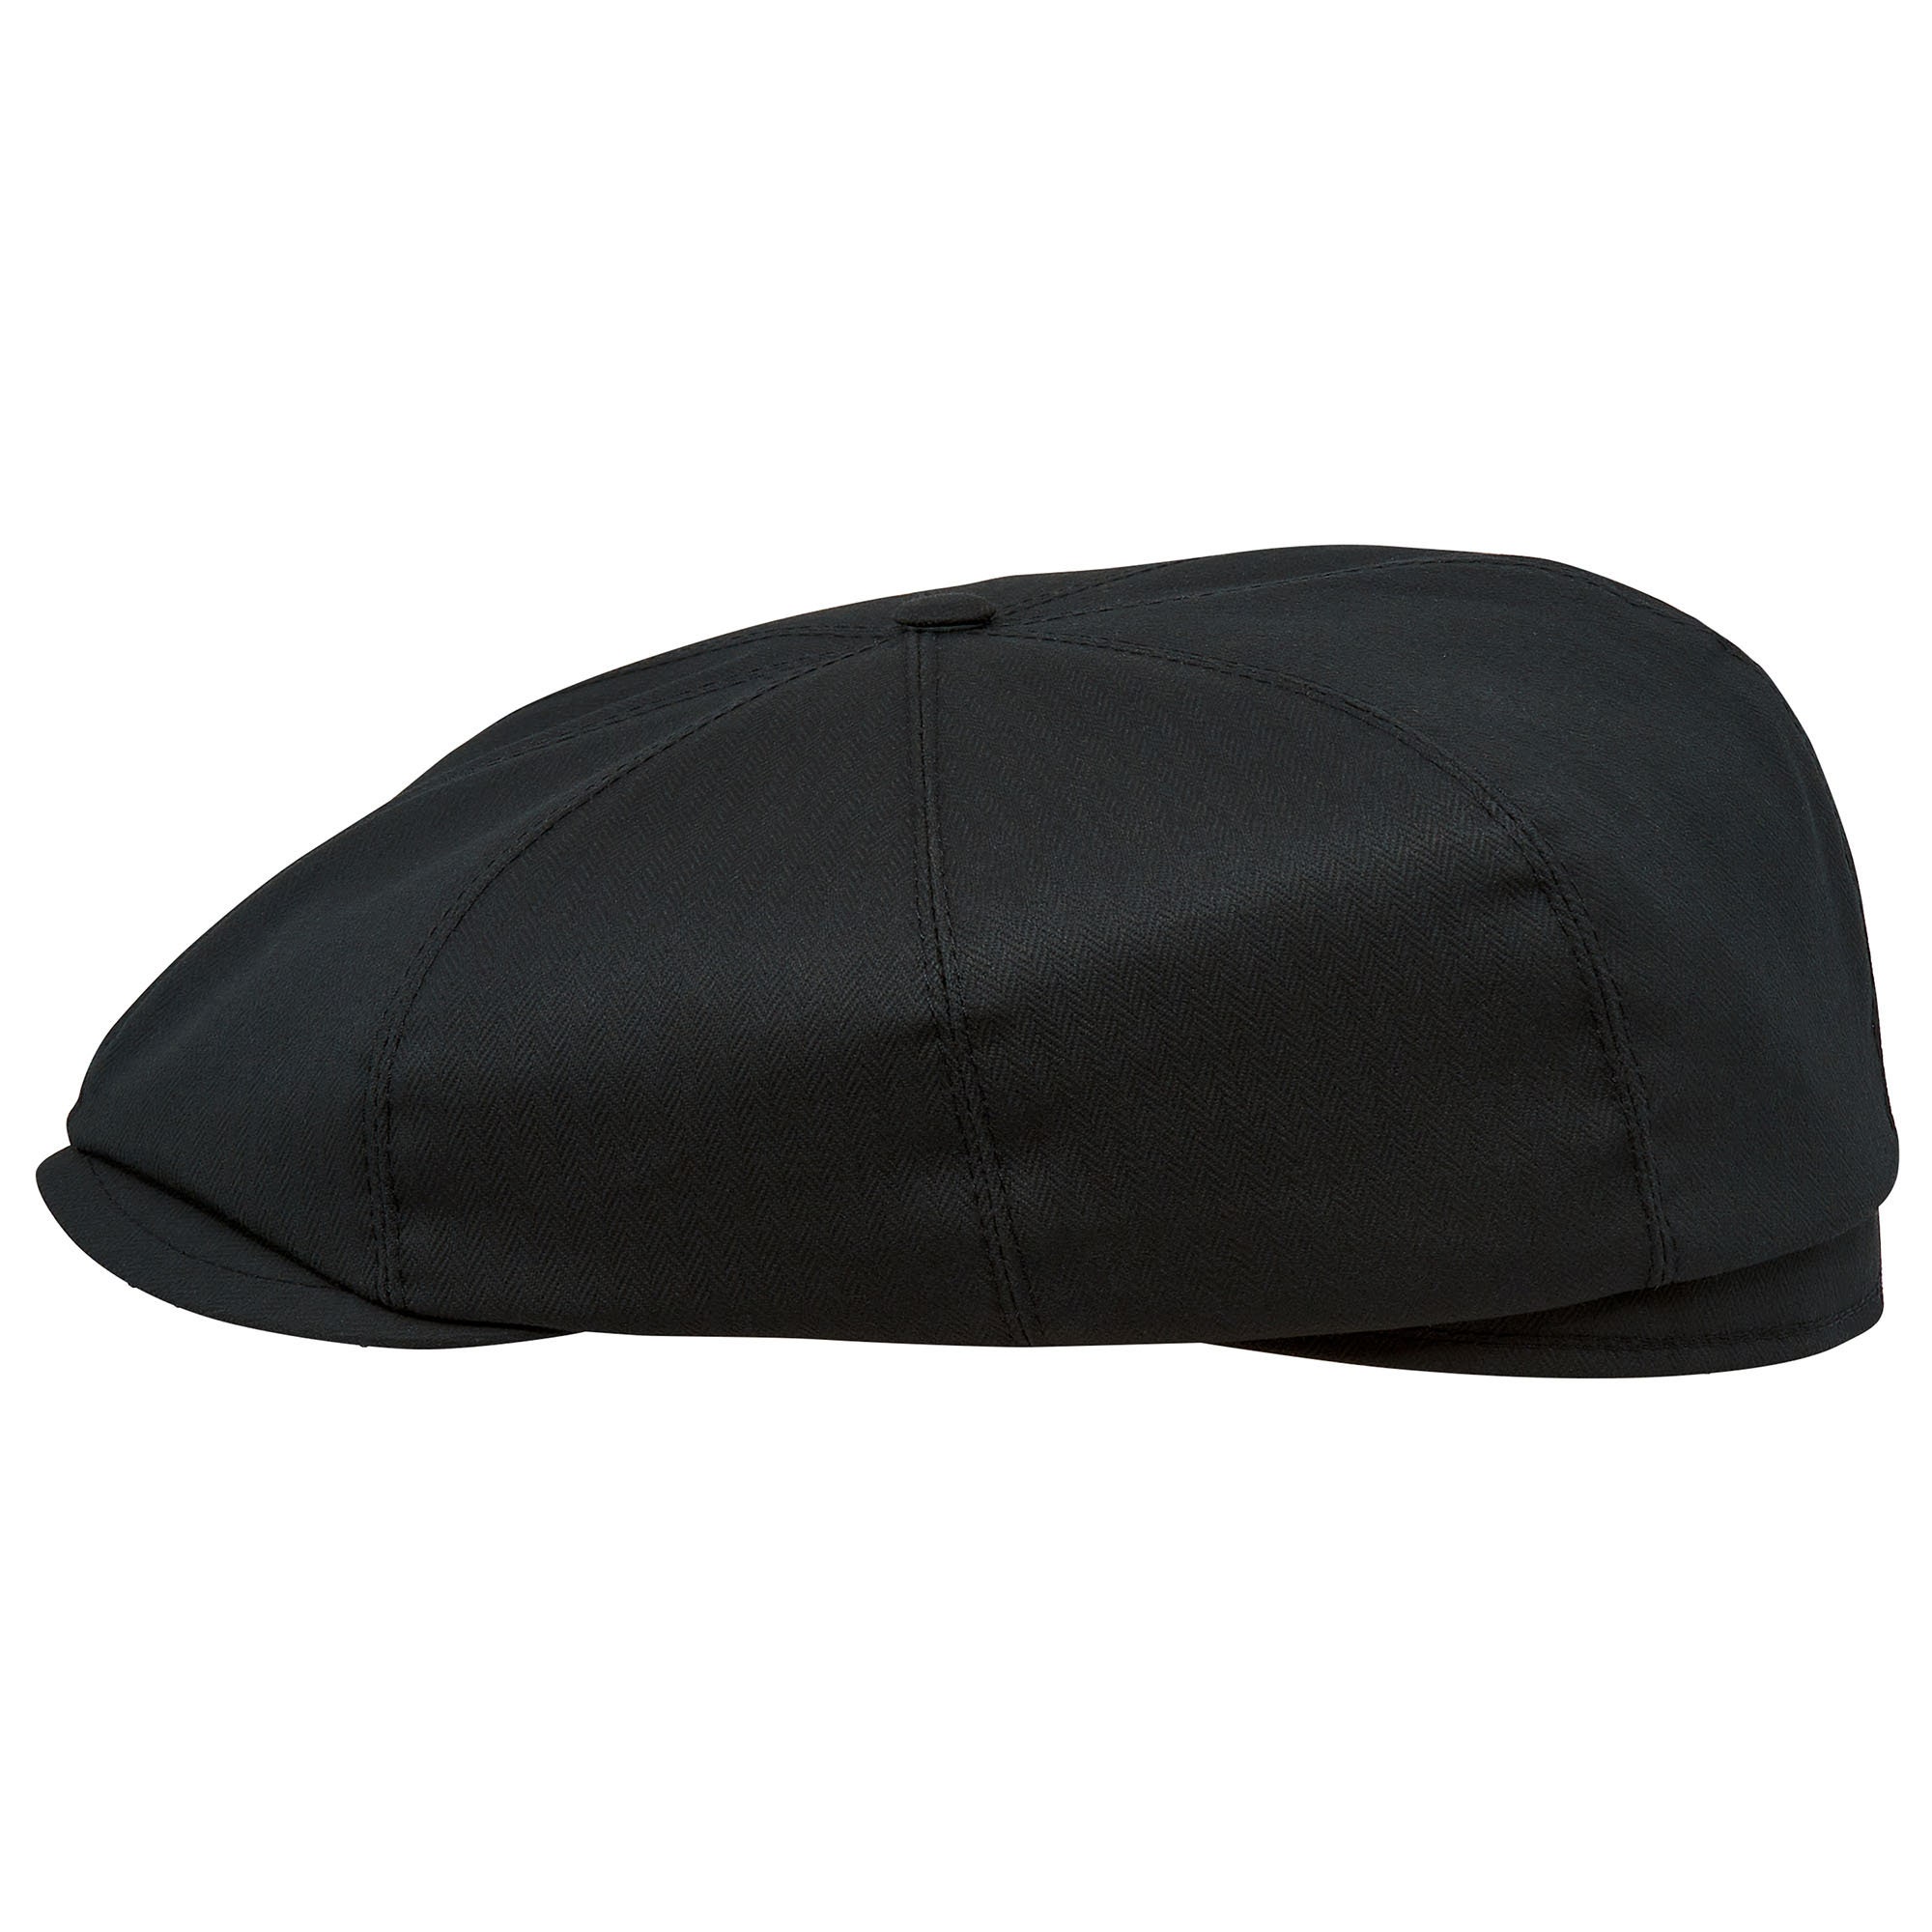 MINAKOLIFE Mens Vintage Style Shelby Cloth Cap Hat Twill Cabbie Hat Newsboy